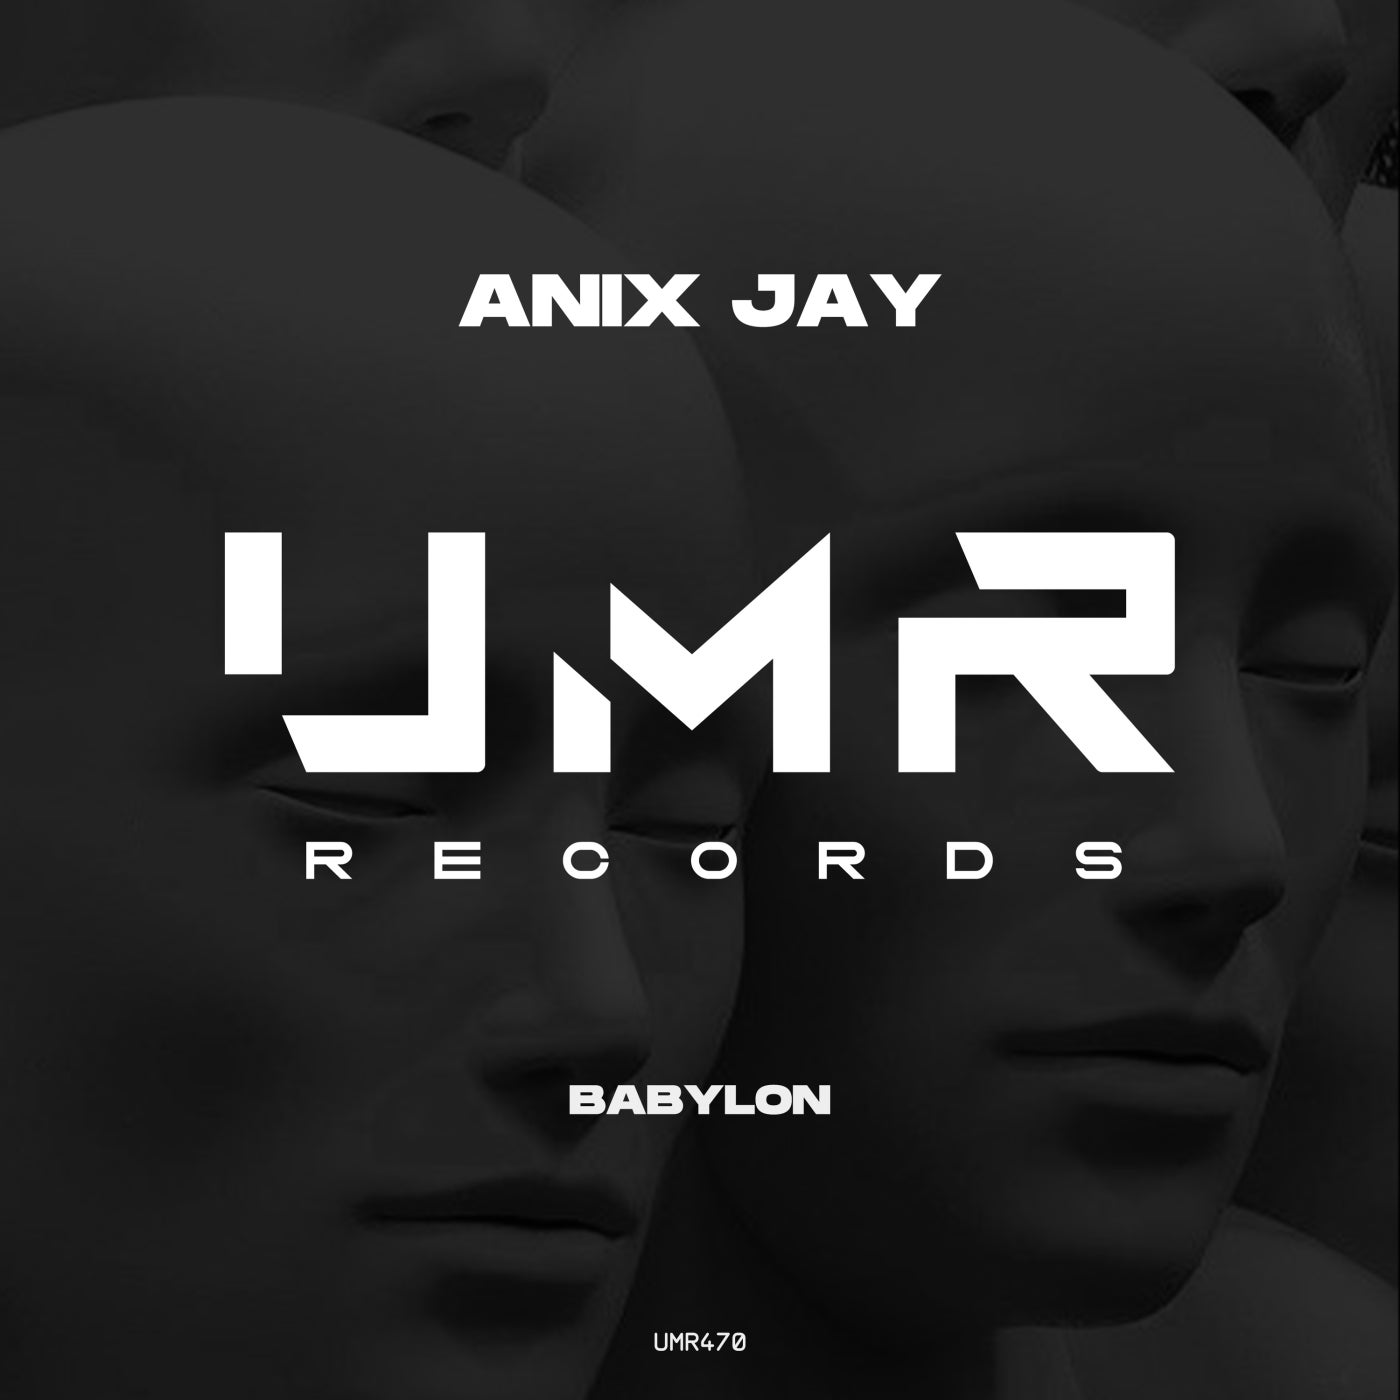 Cover - ANix JAy - Babylon (Original Mix)